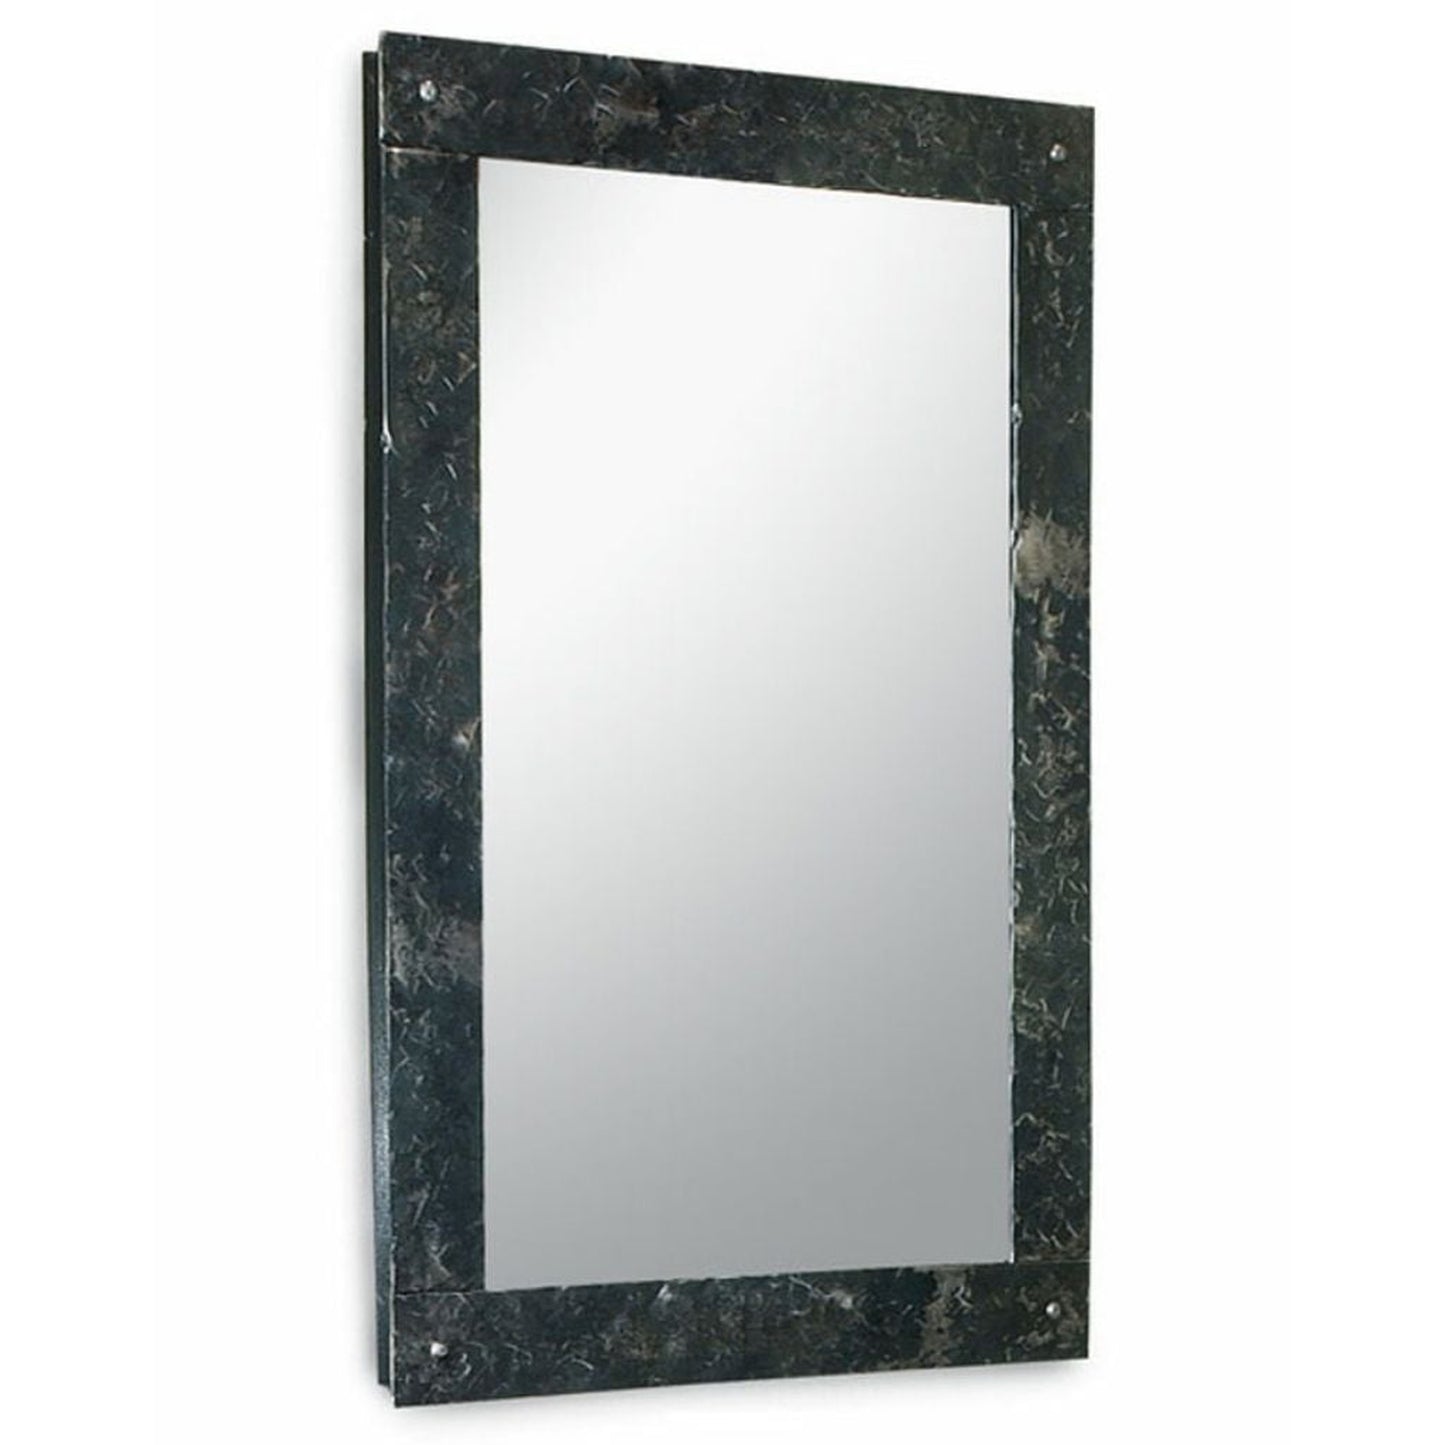 Stone County Ironworks Studio Series 23" x 29" Satin Black Finish Rectangular Mirror